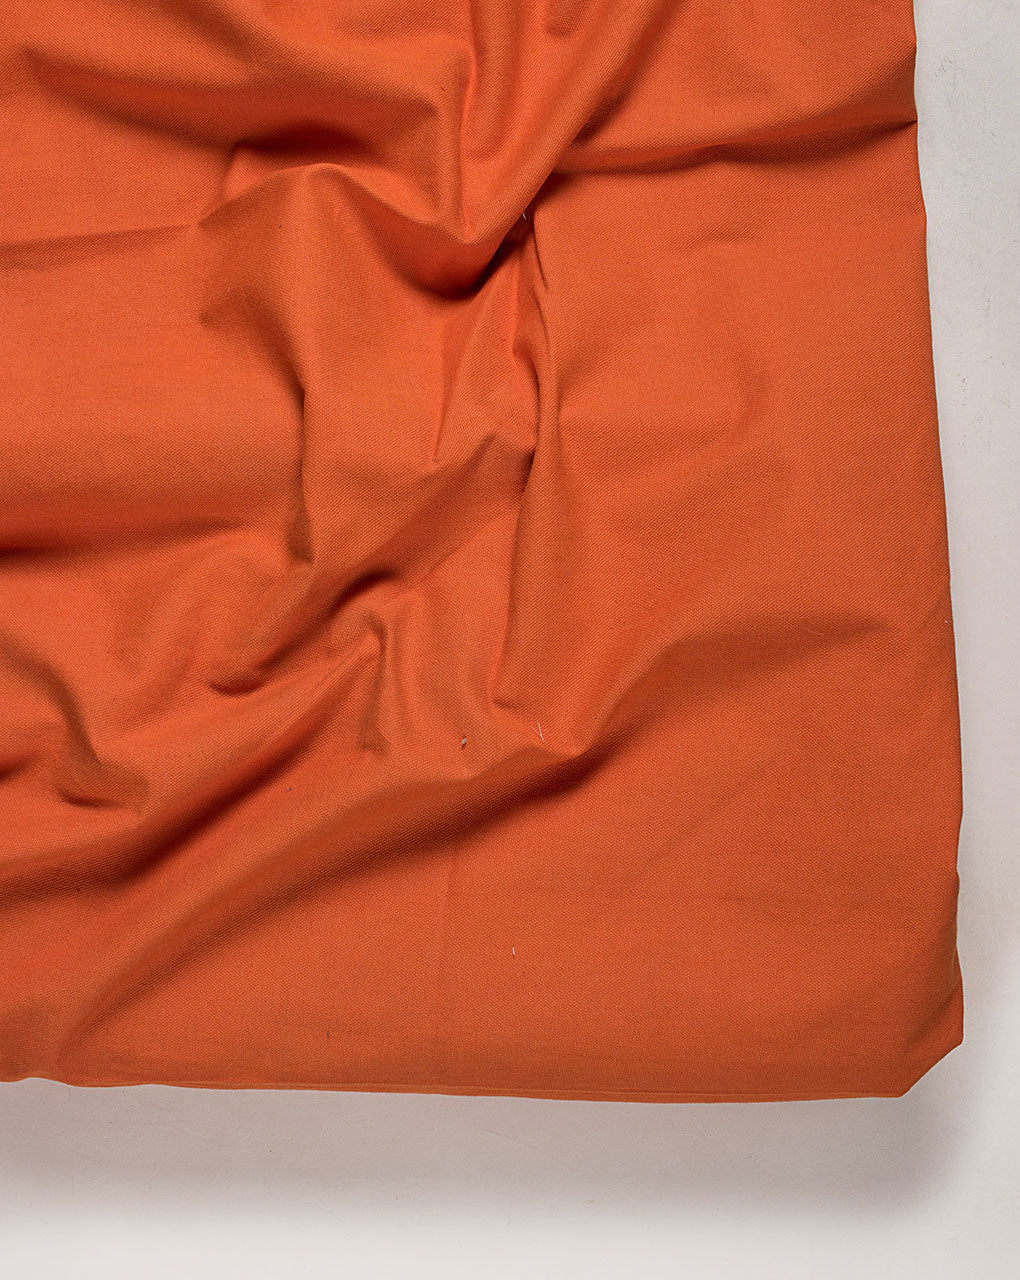 Orange Plain Cotton Duck Fabric